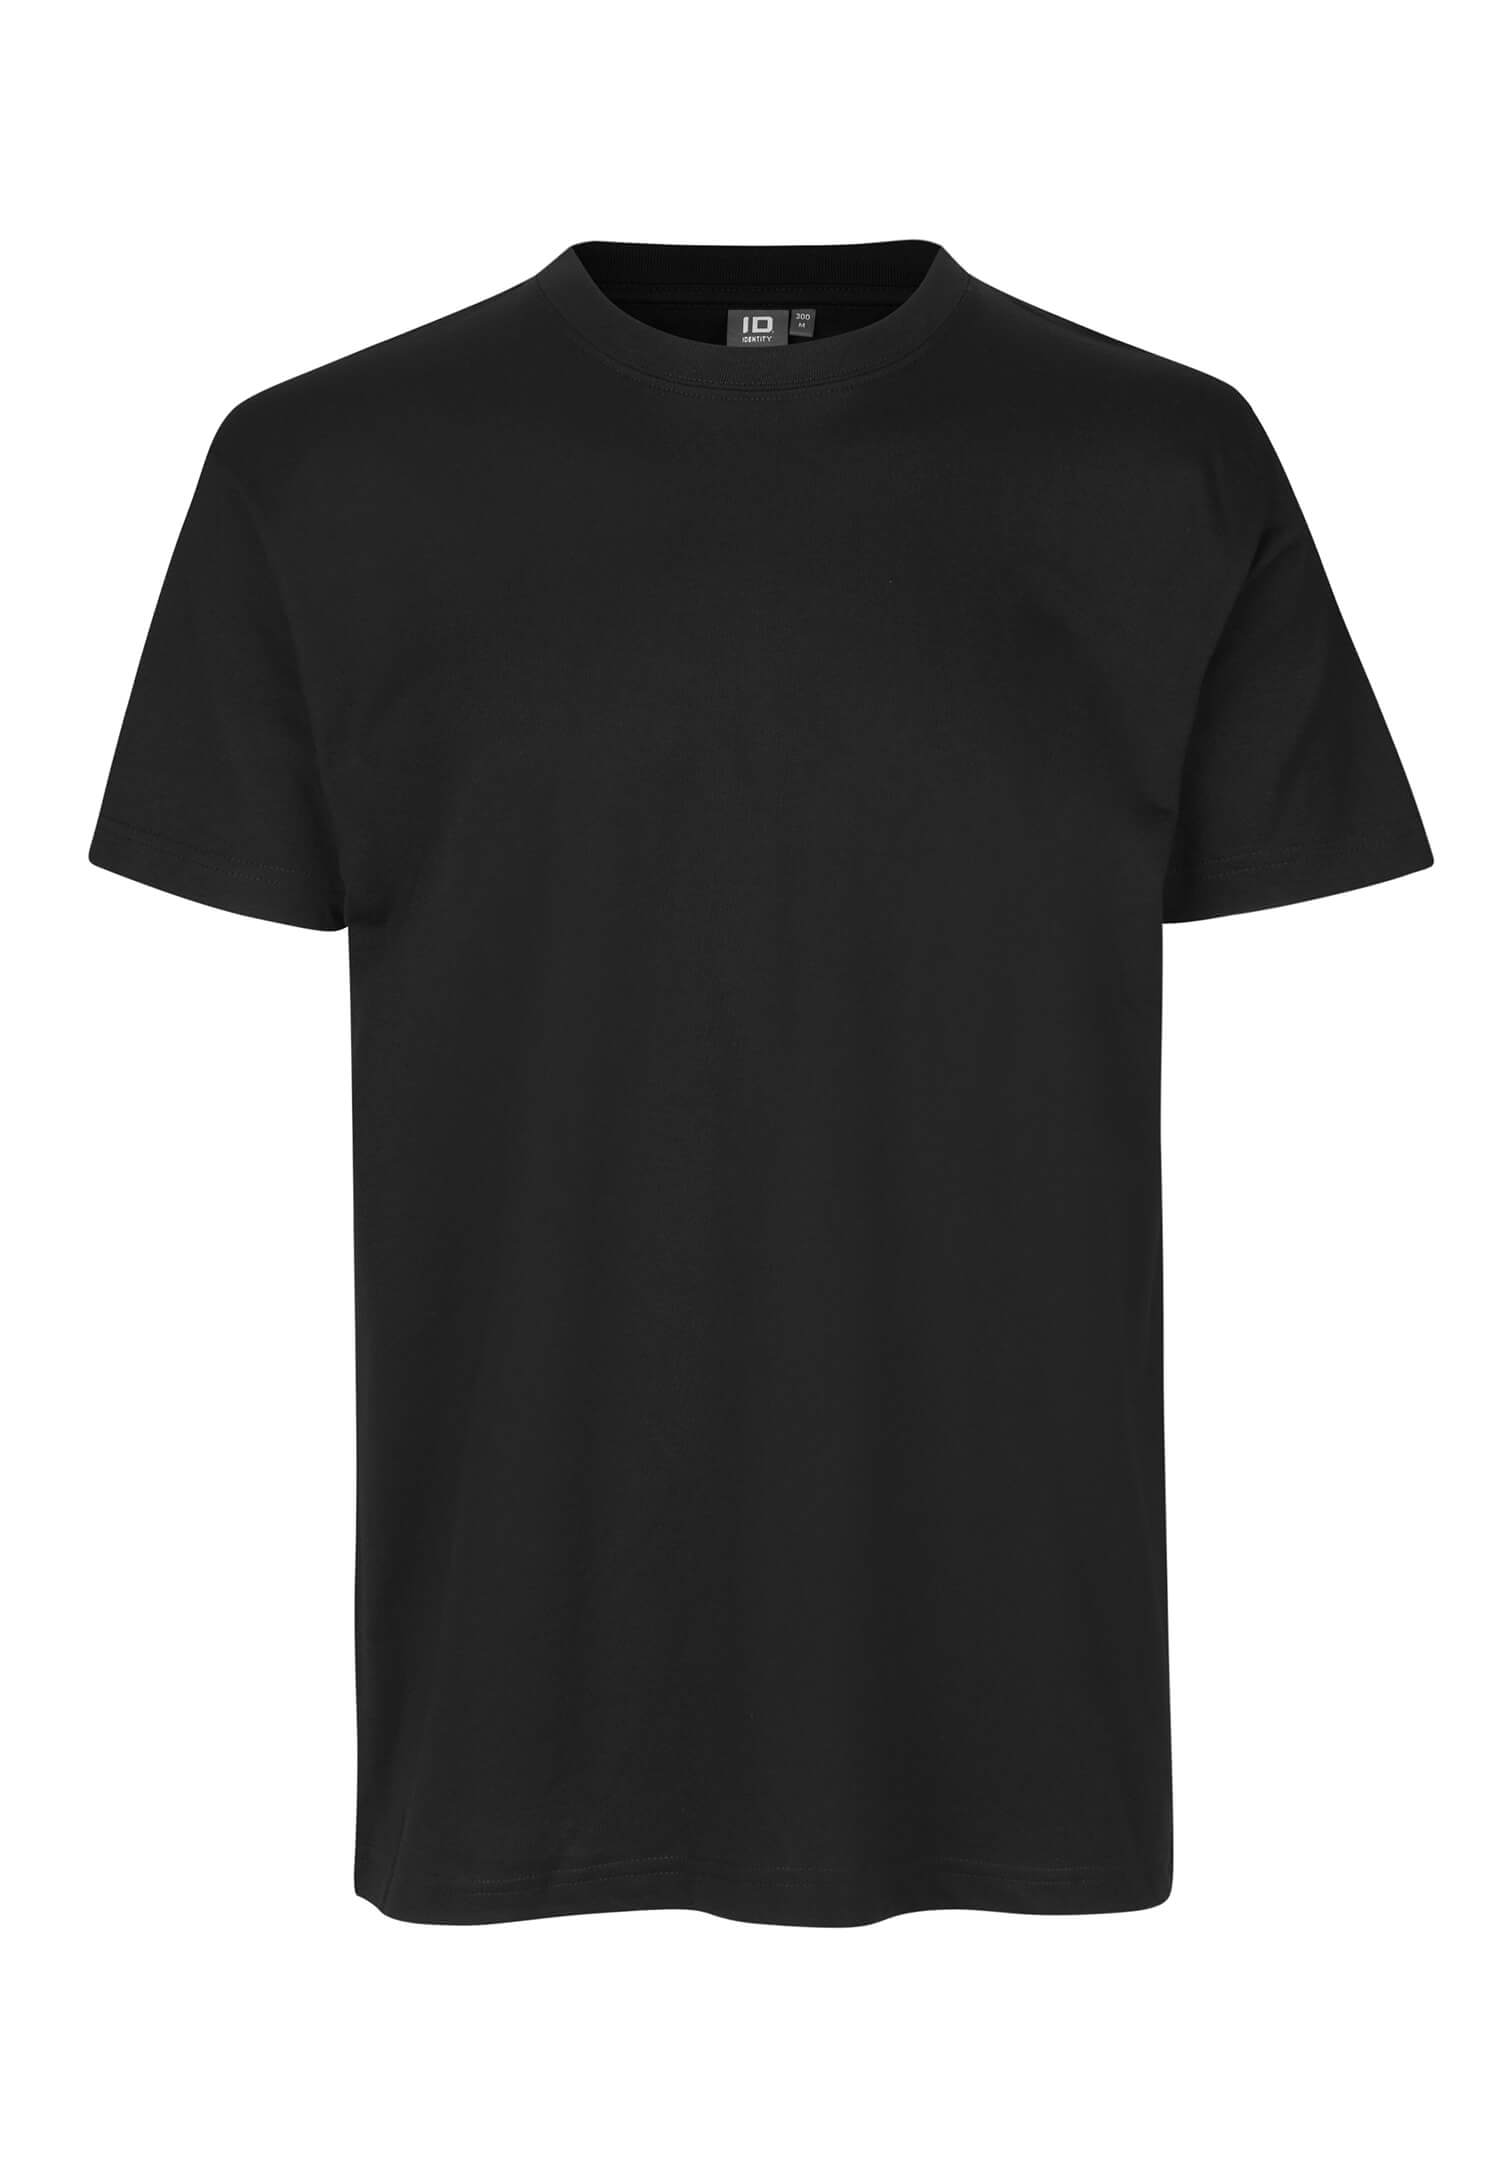 Bestatter T-Shirt - schwarz - L